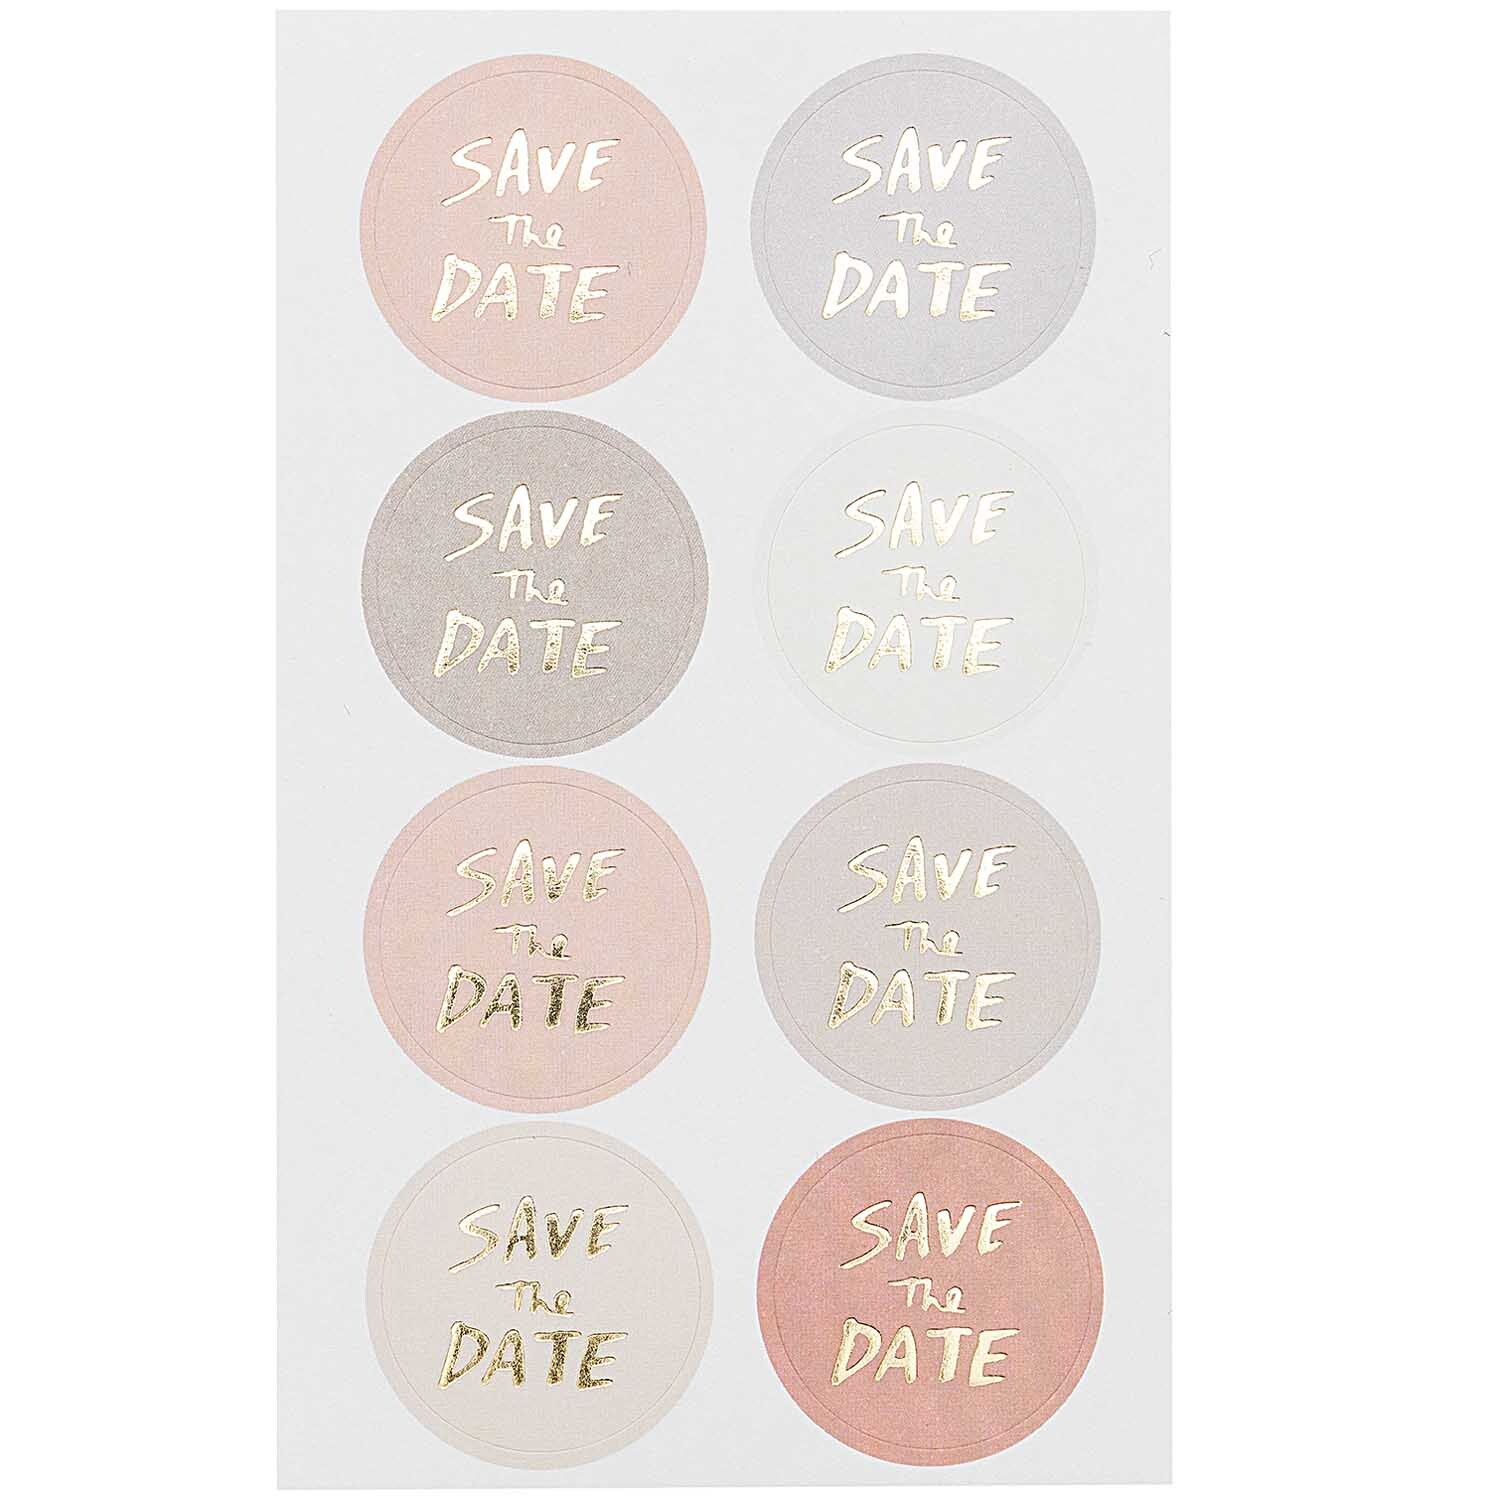 Paper Poetry Sticker Save the Date puder-grau 4 Blatt